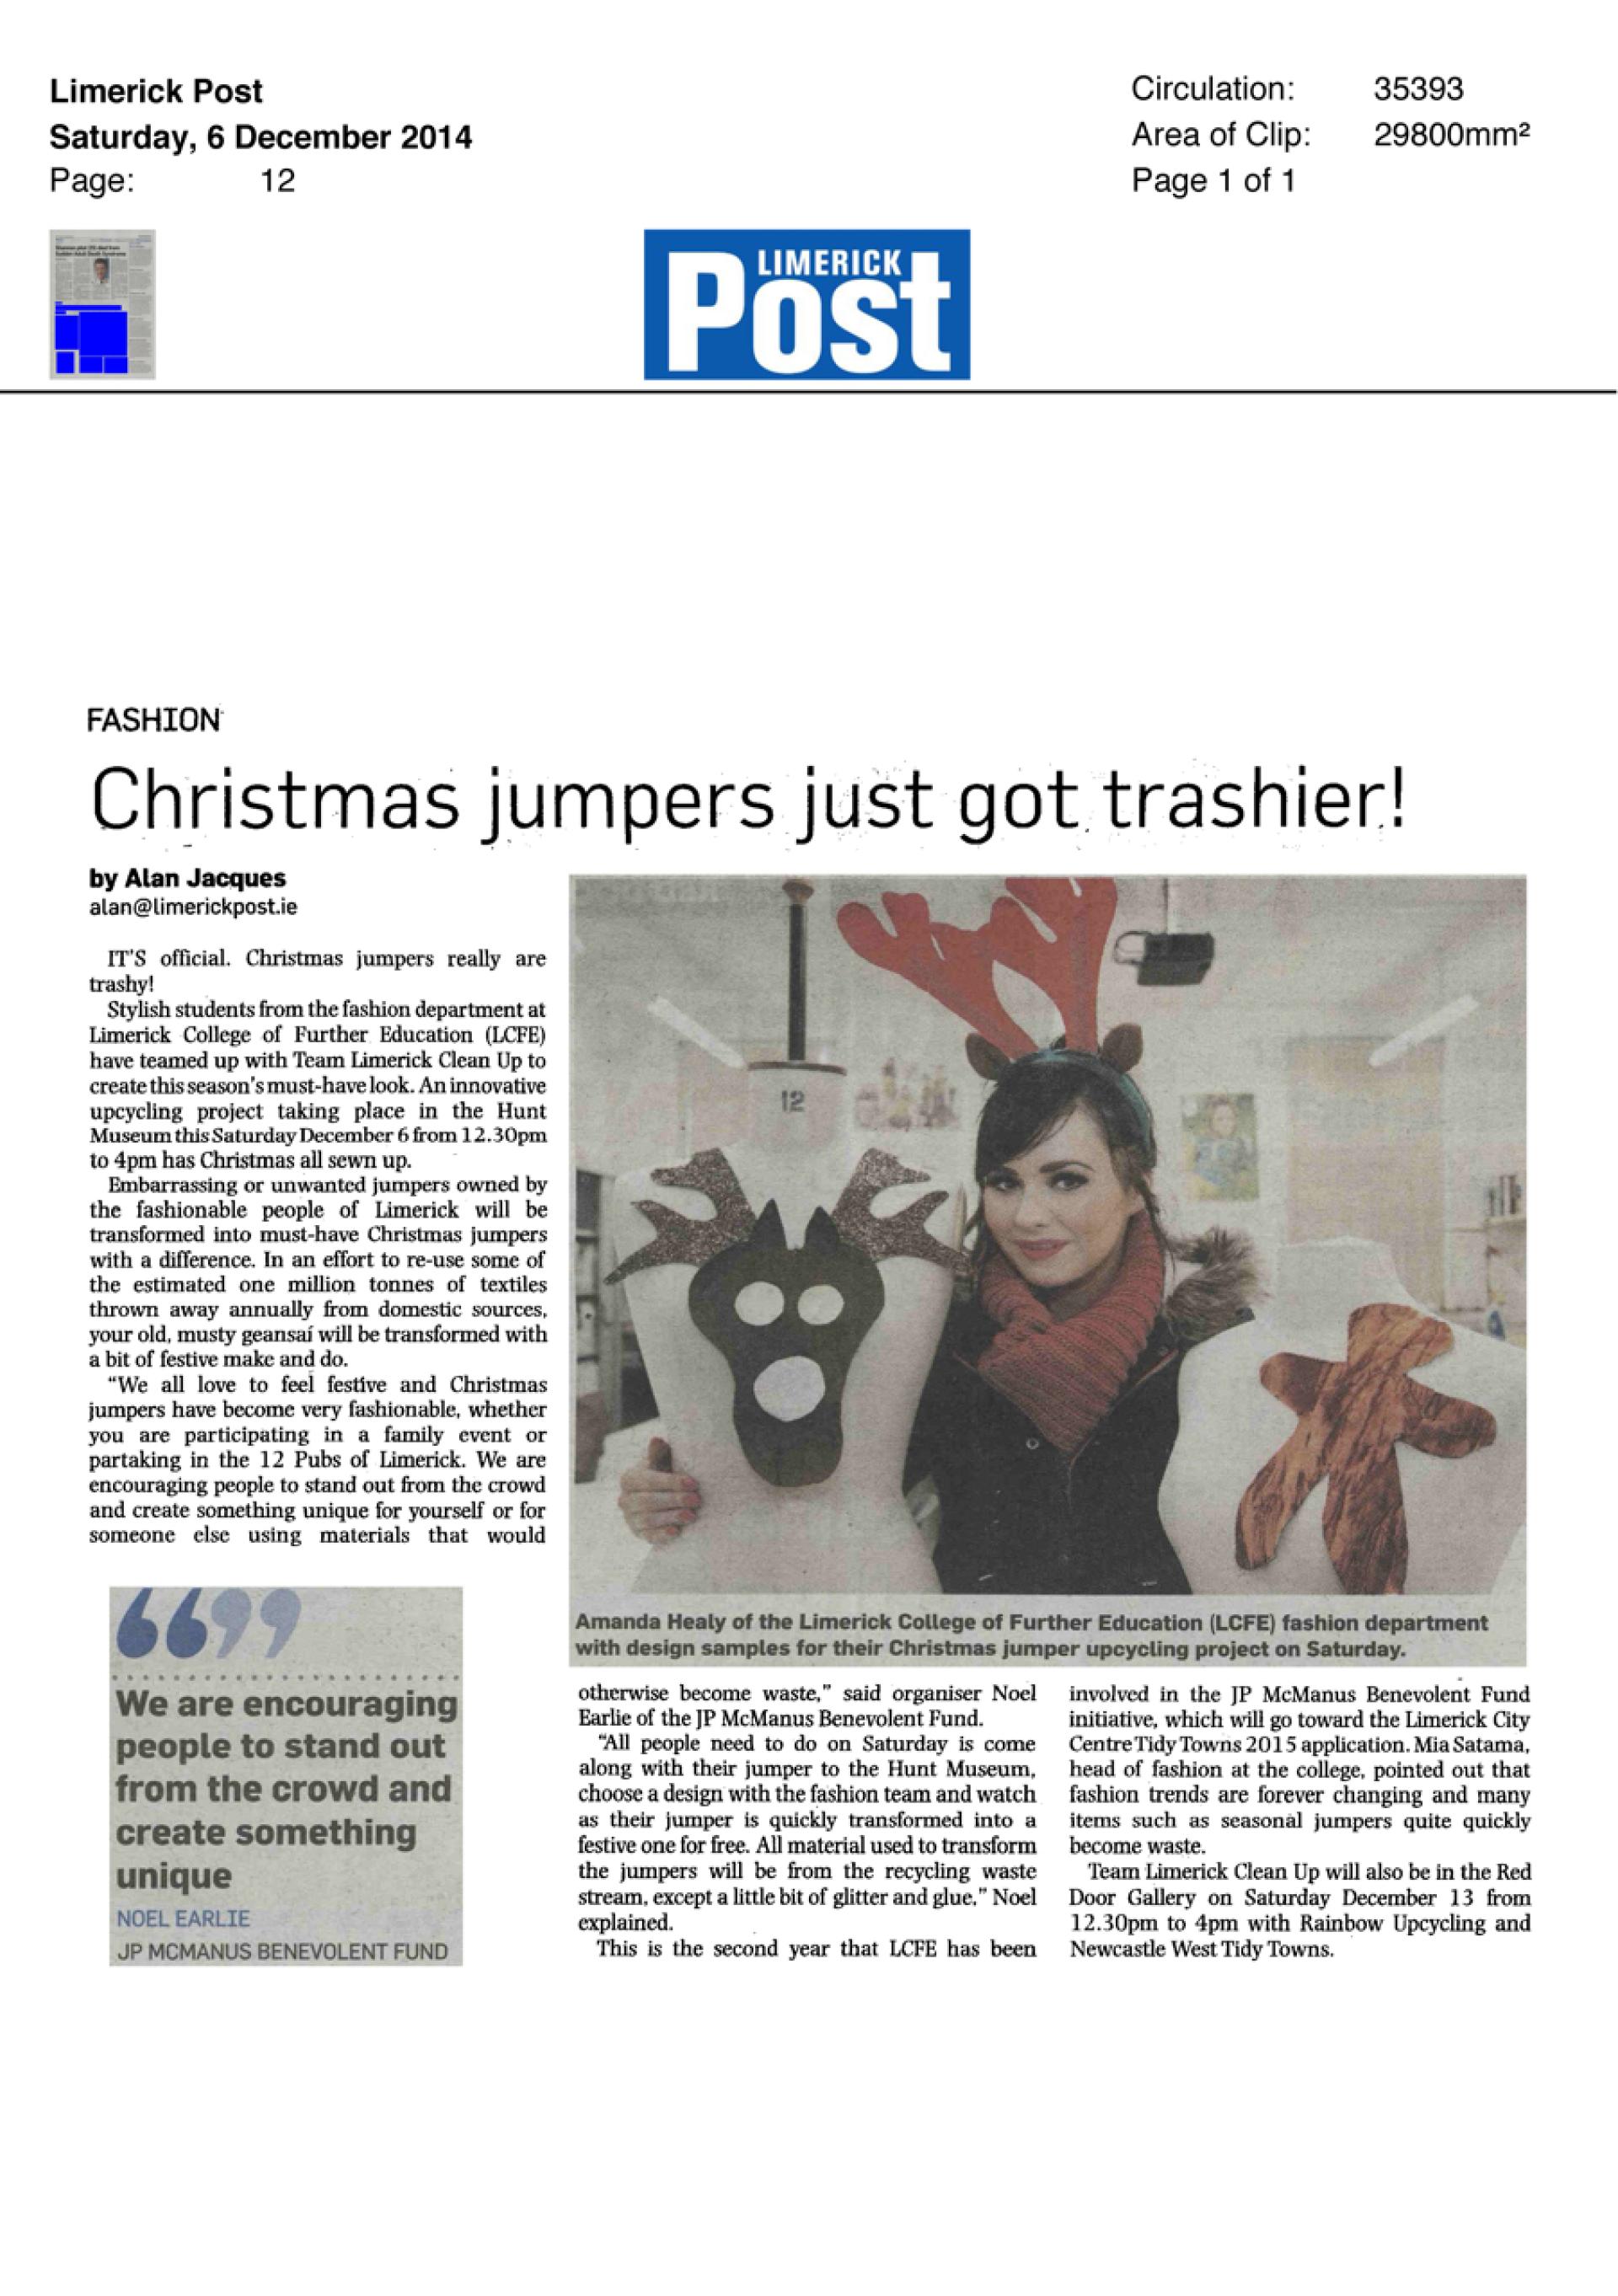 Limerick Post Christmas Jumper article